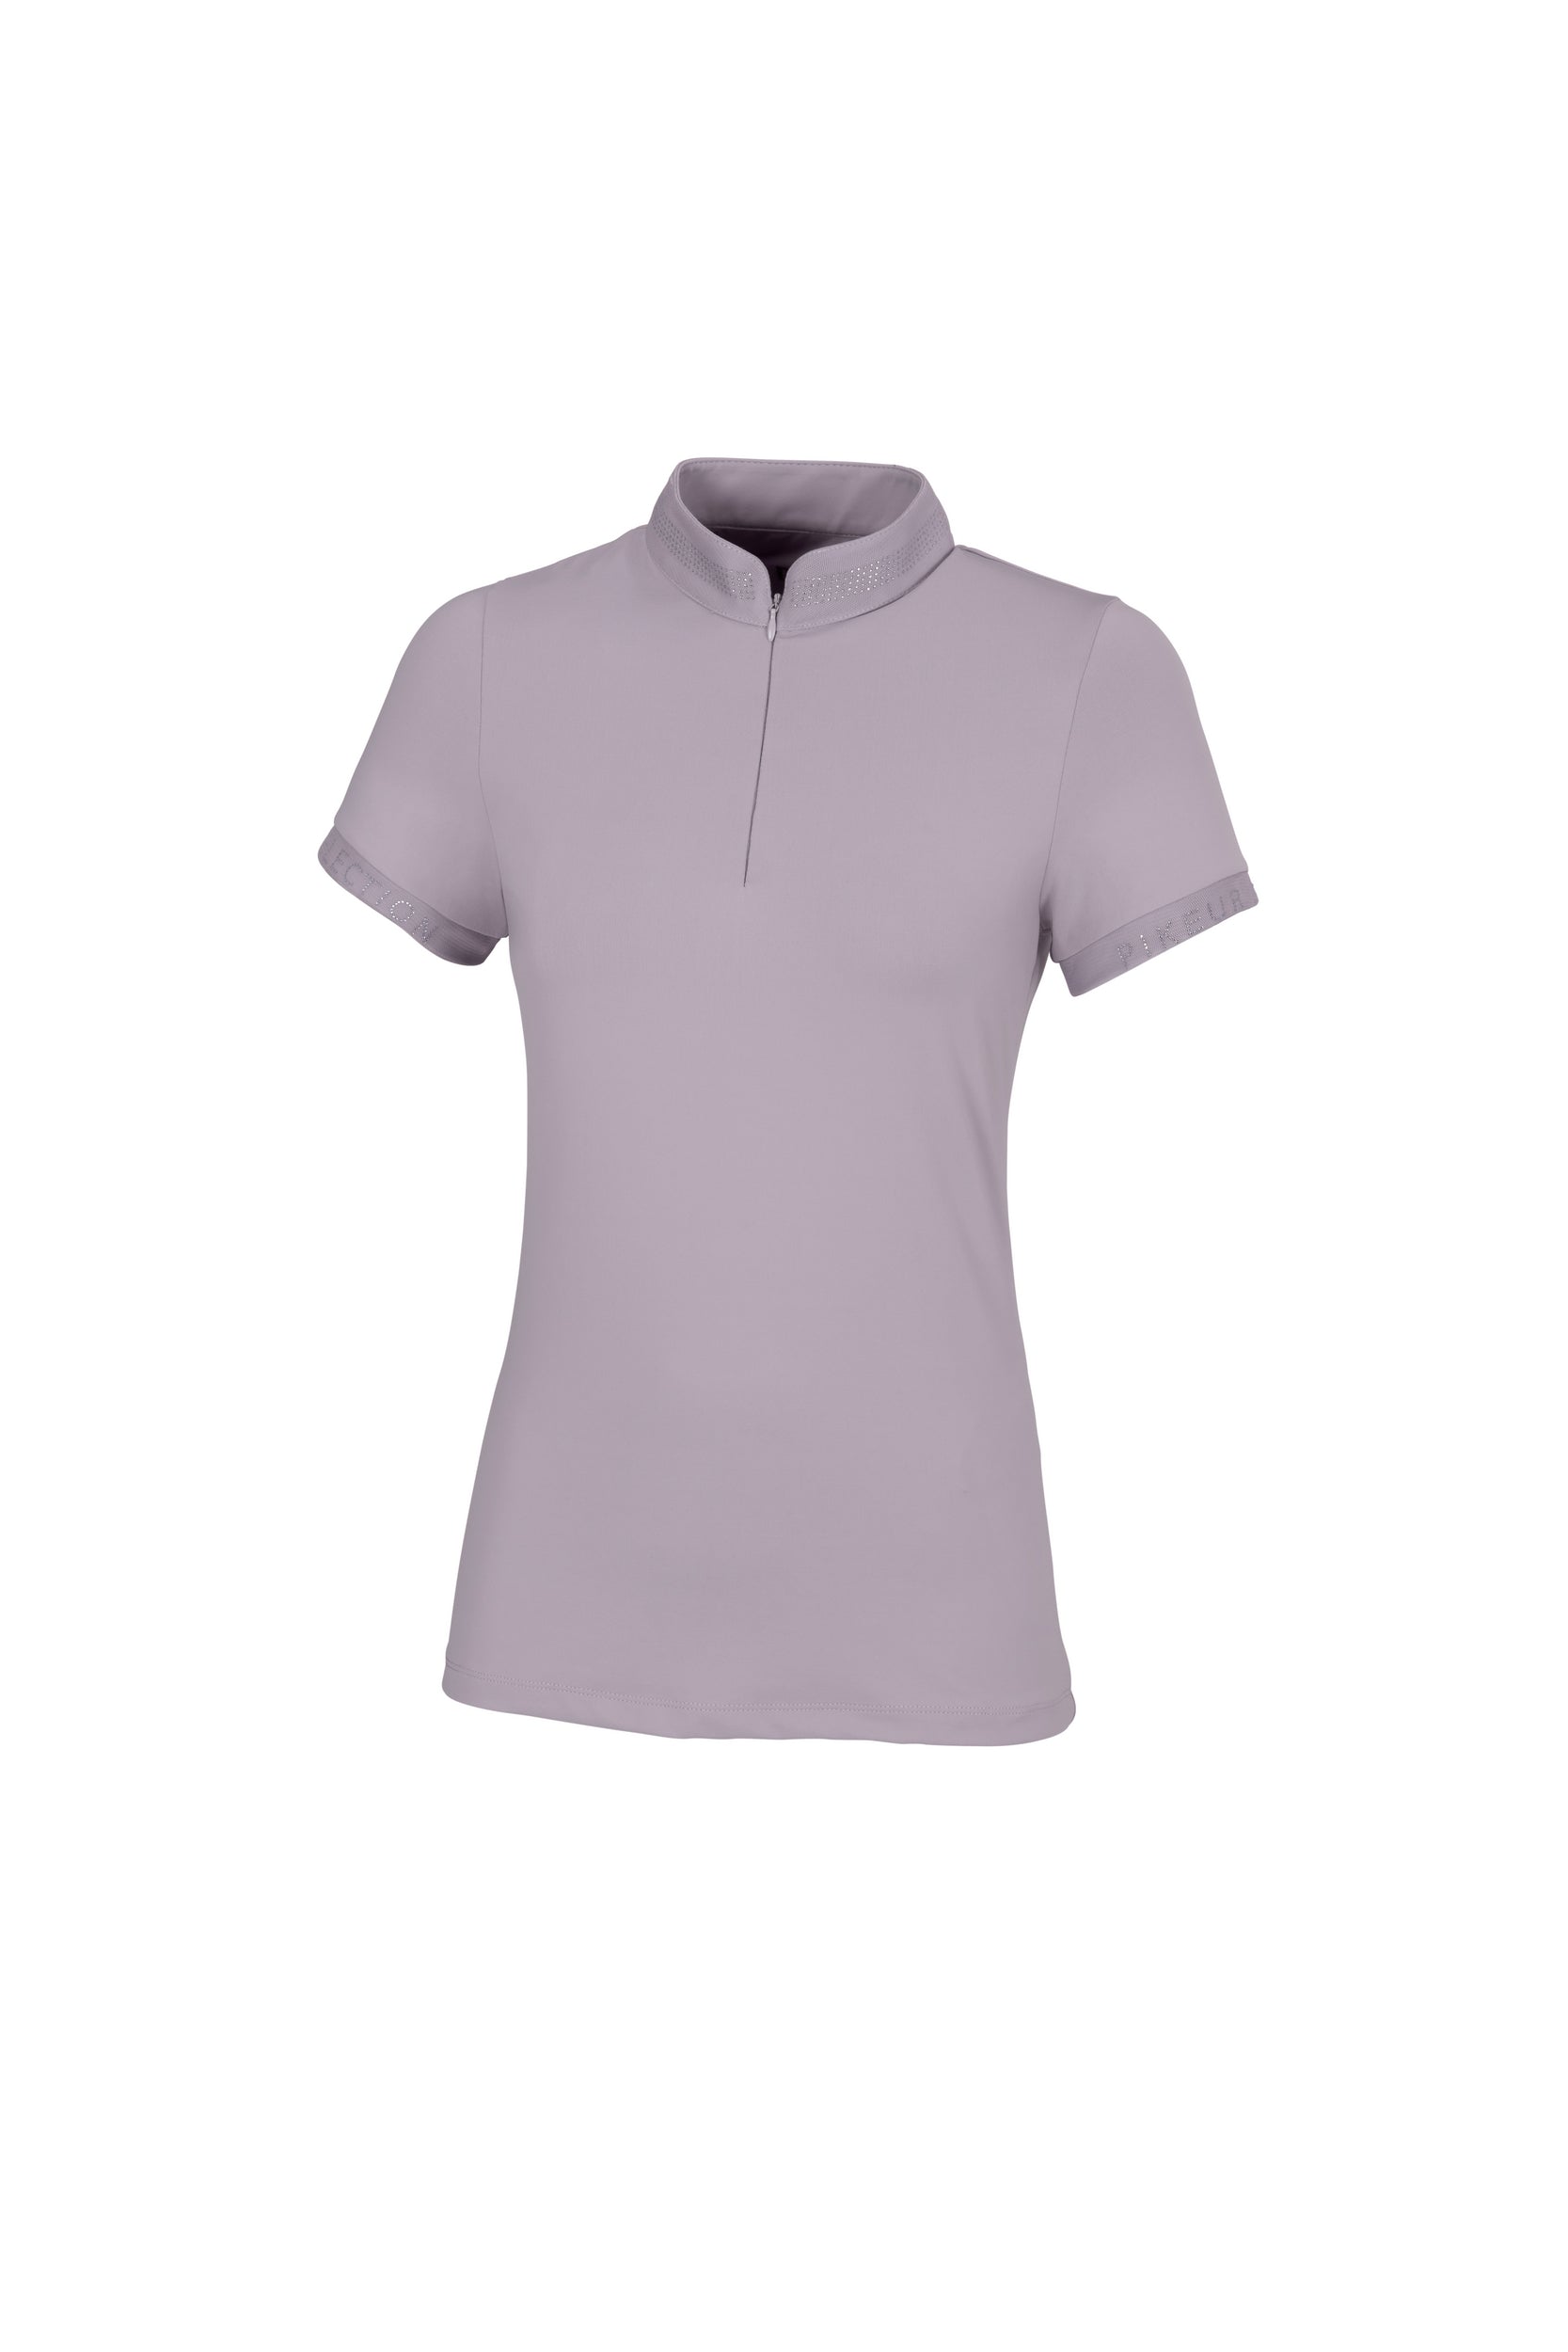 Pikeur Pernille shirt Silk purple